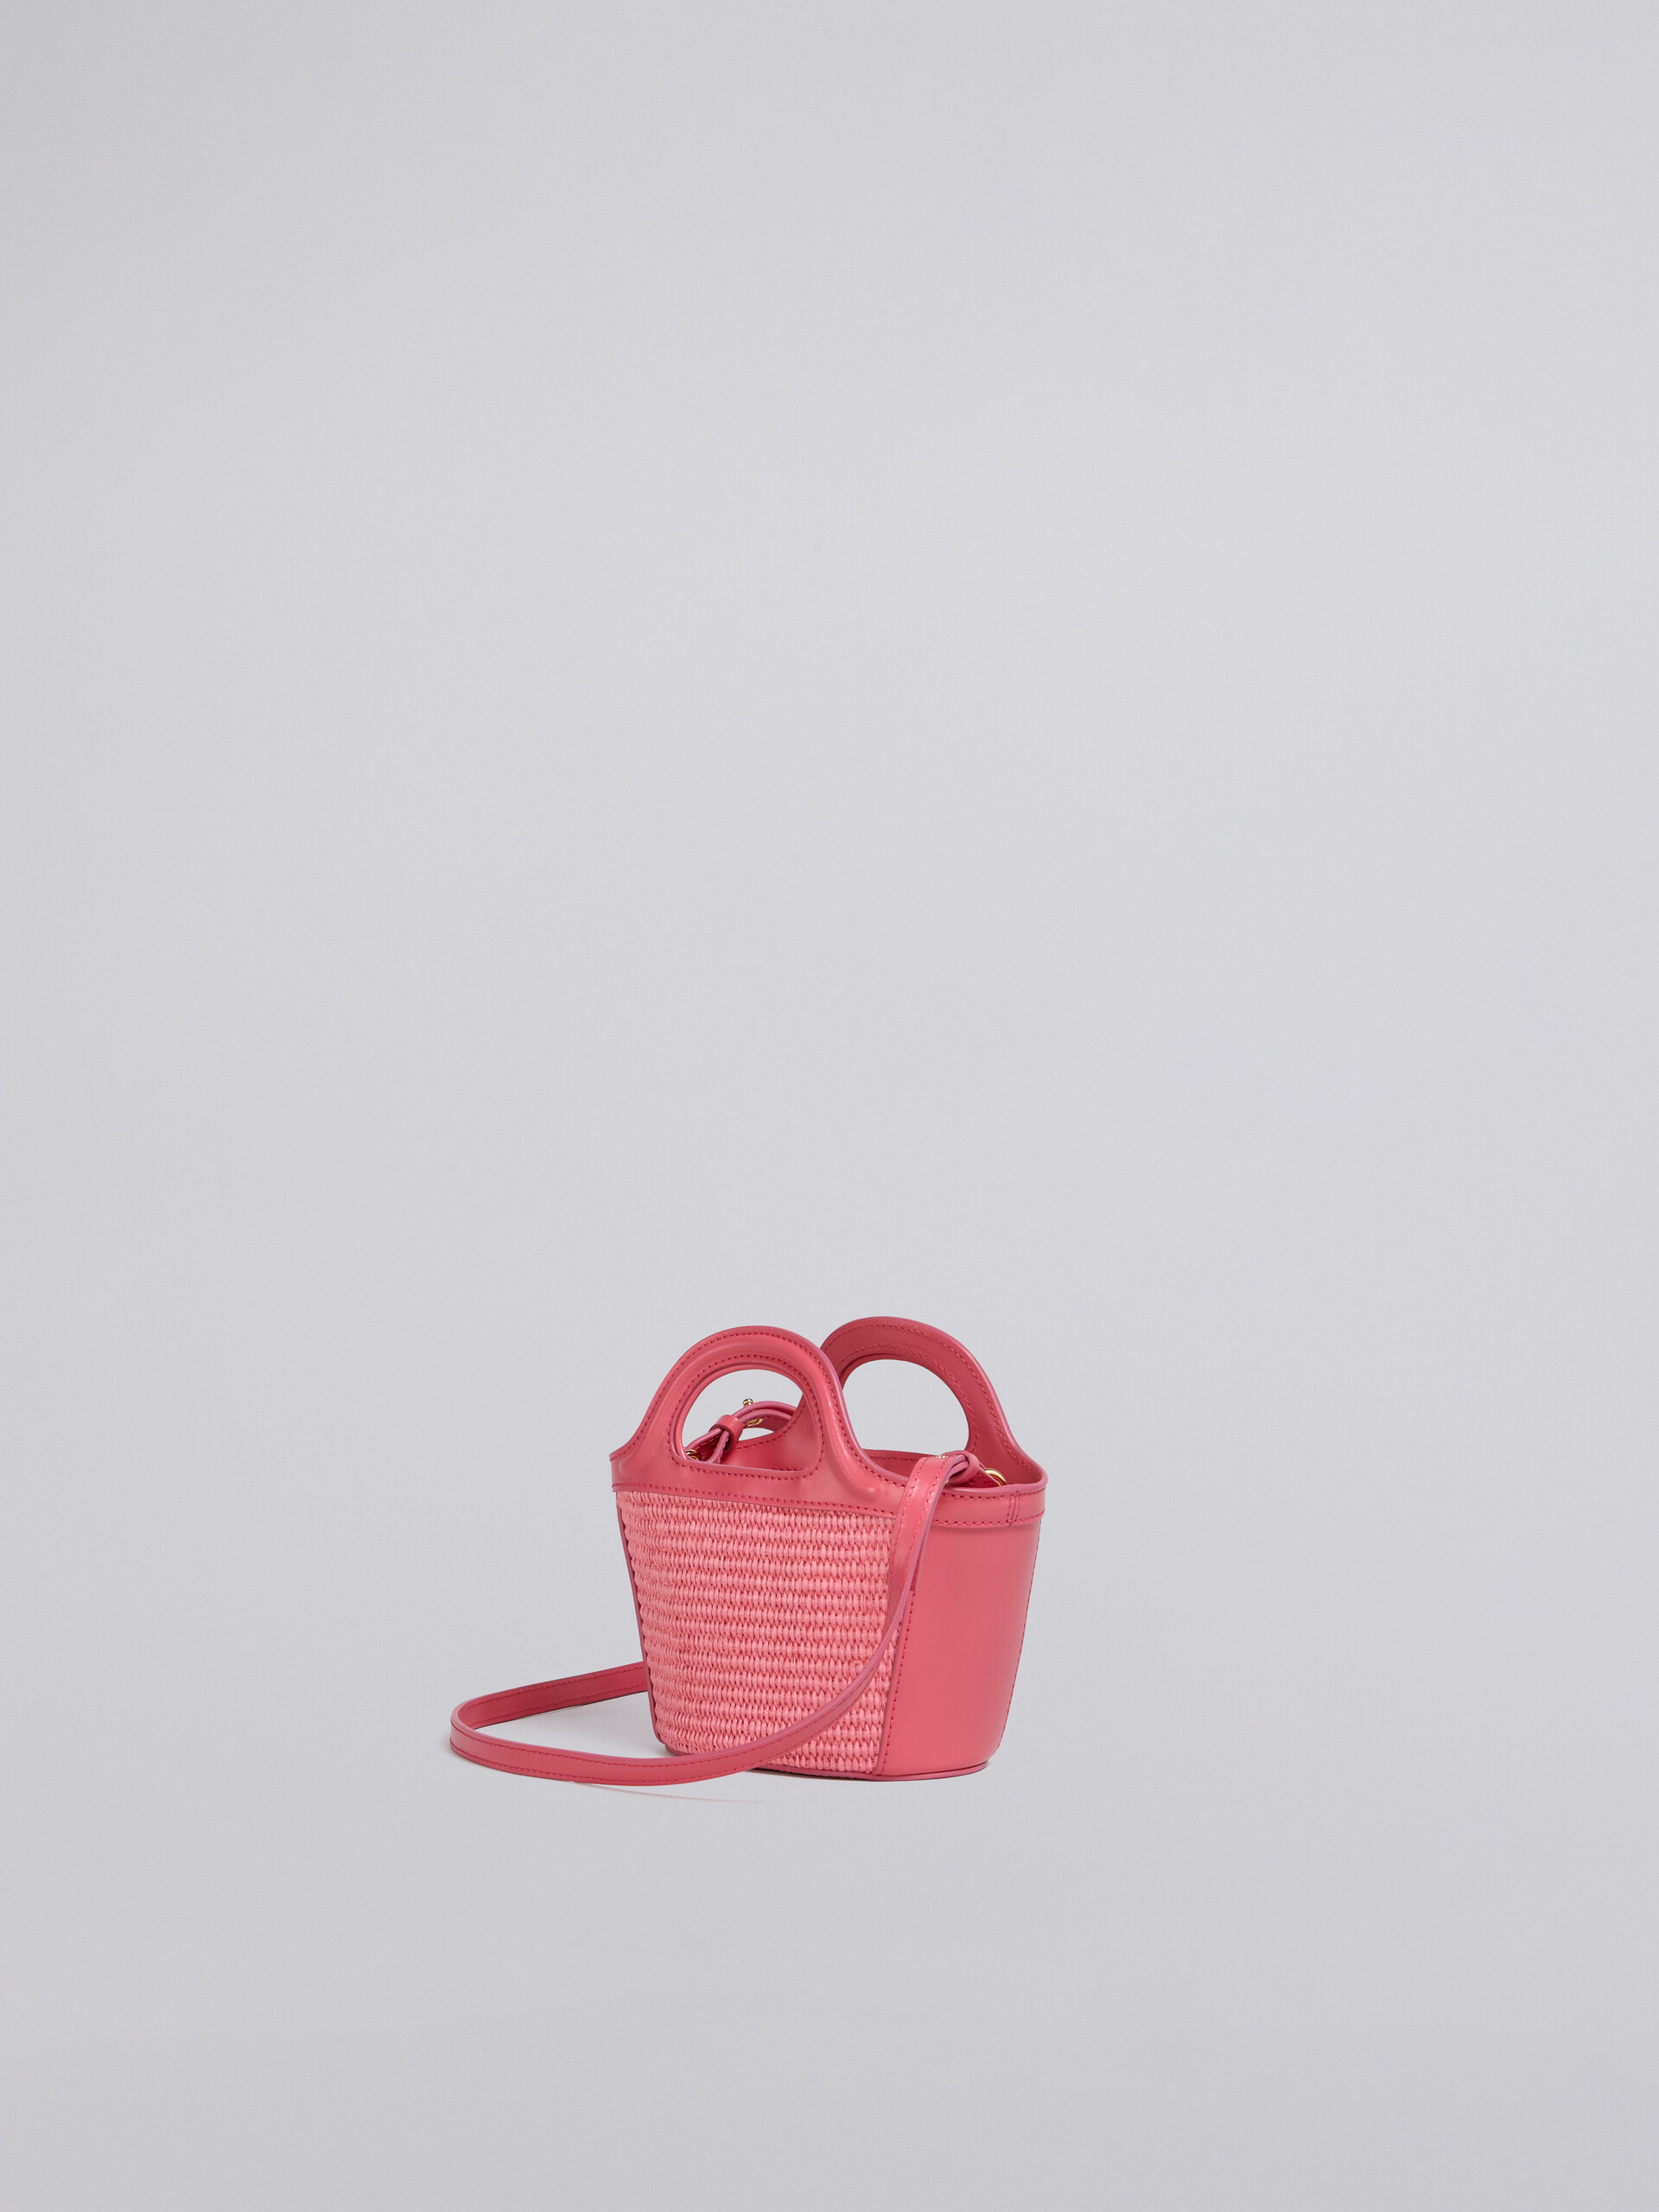 TROPICALIA micro bag in pink leather and raffia - Handbags - Image 3